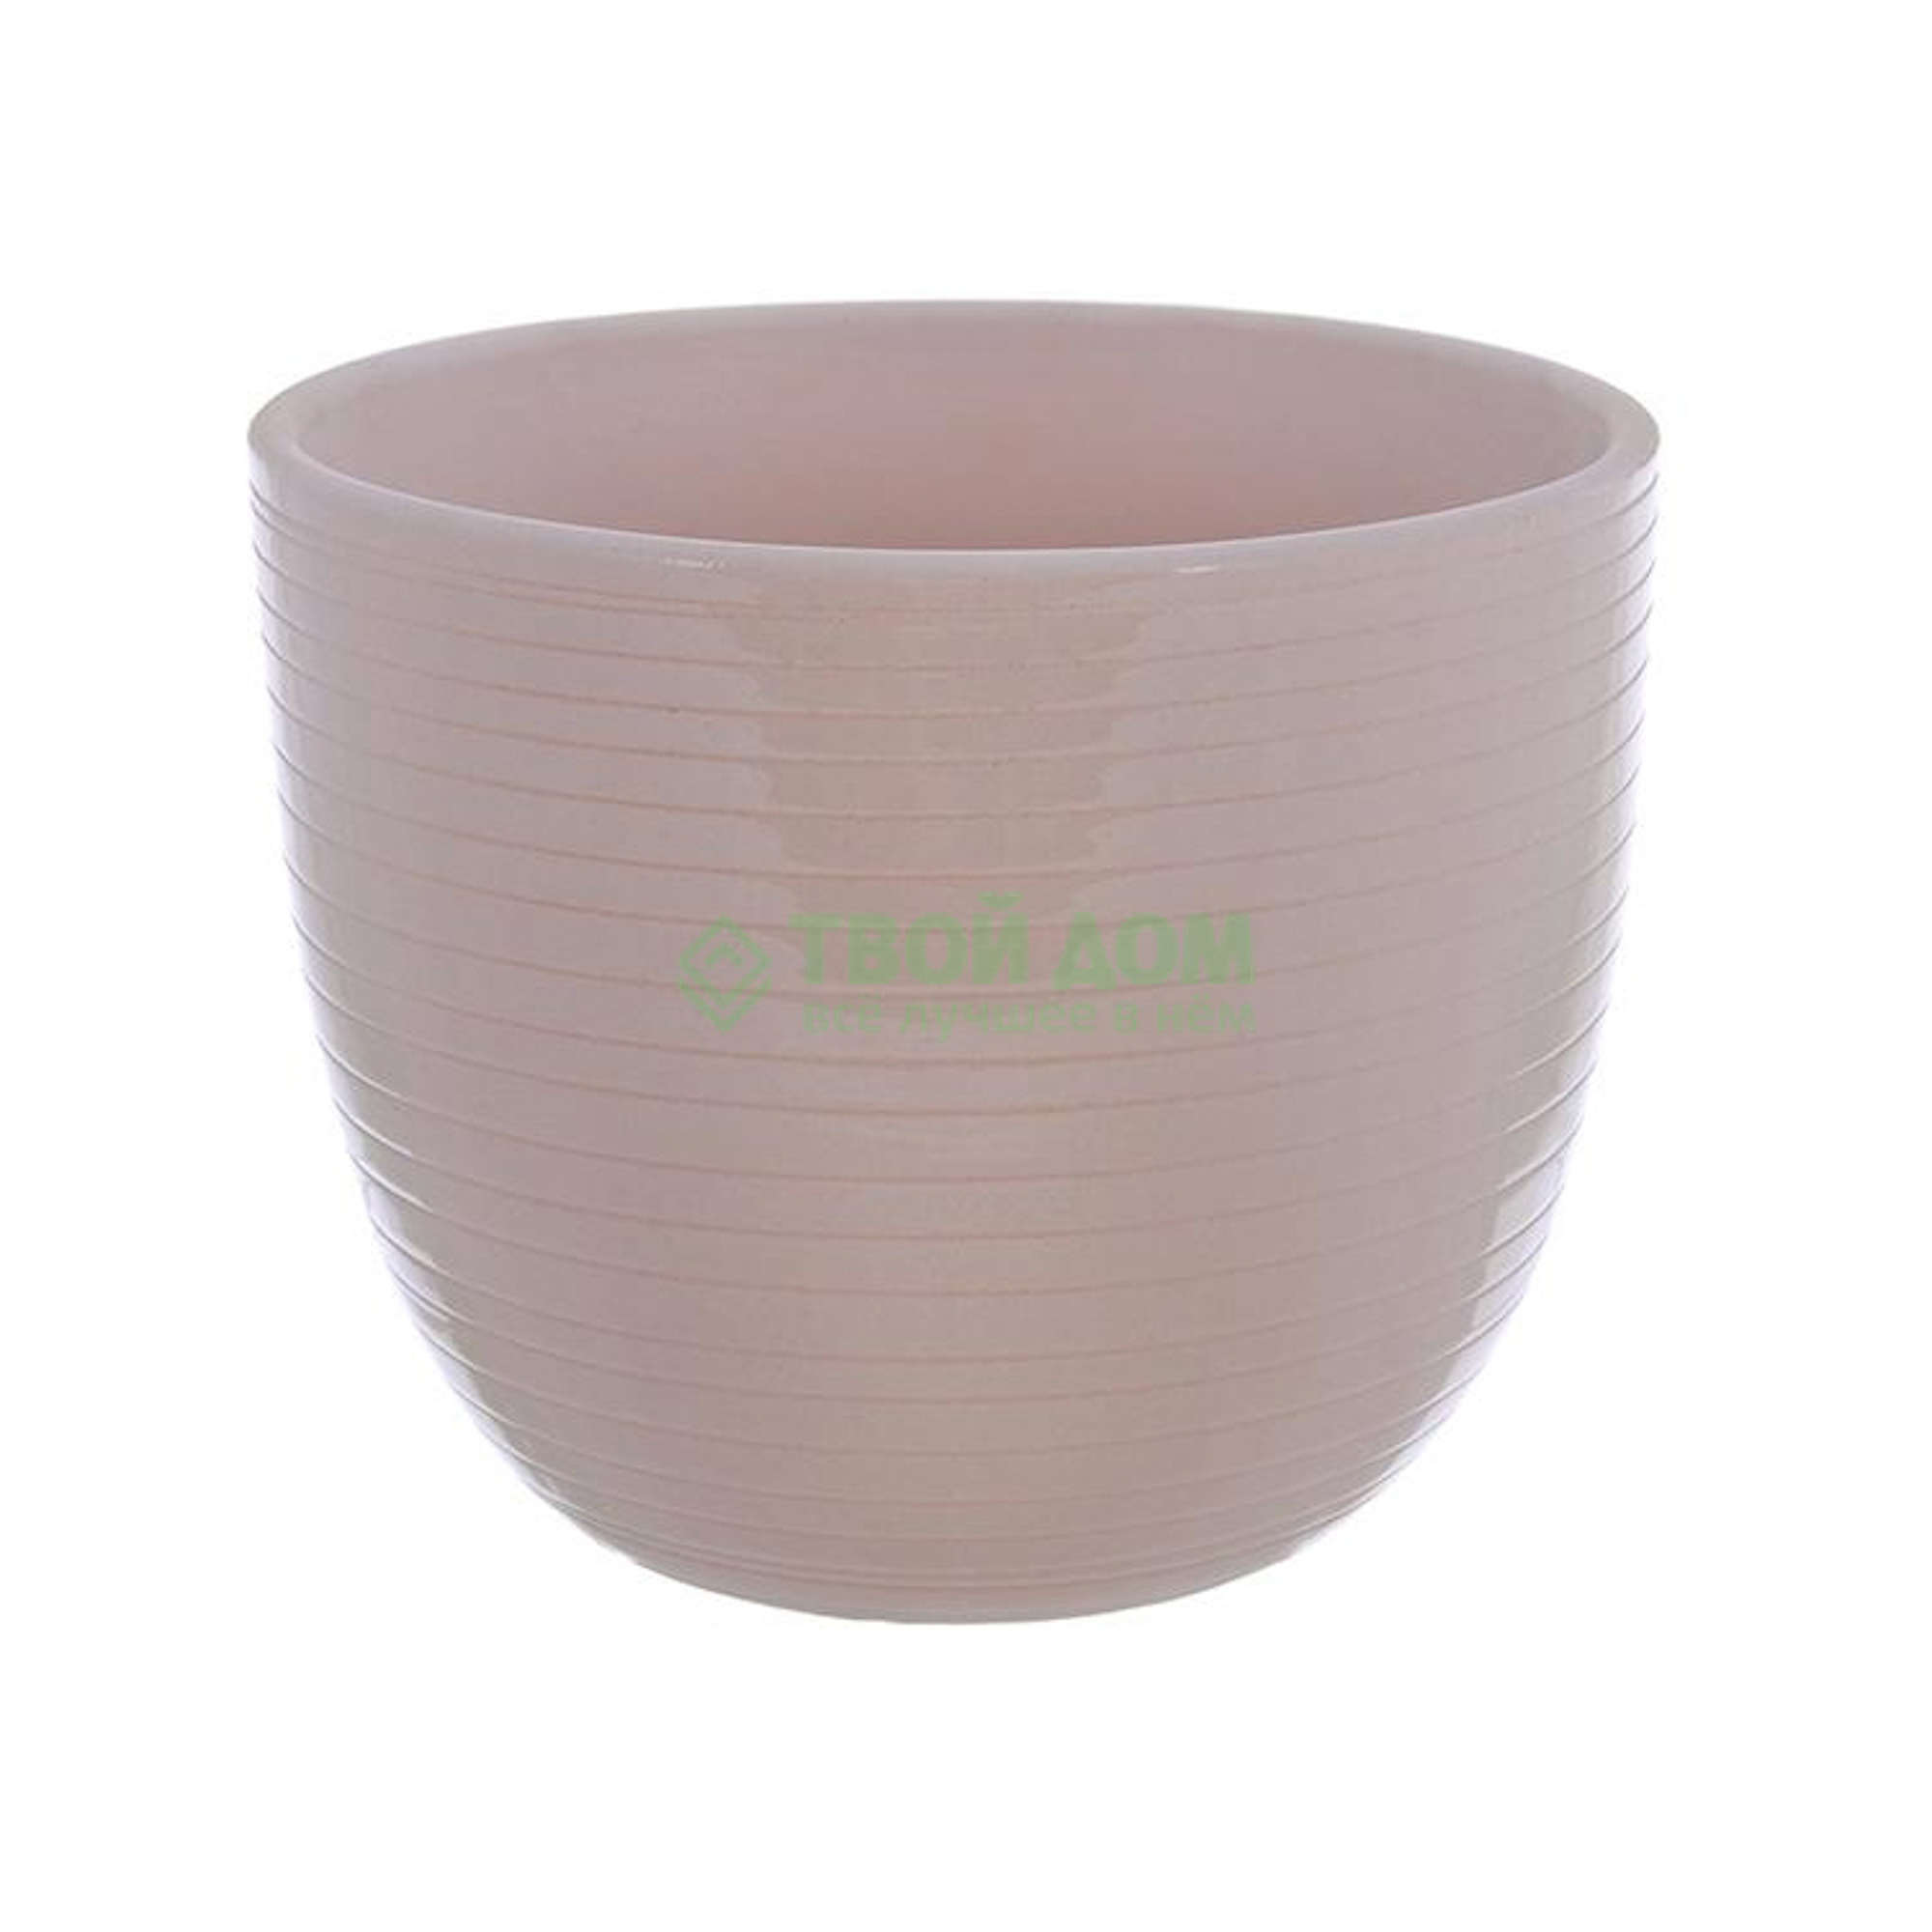 Горшок Ceramik Toscania (5906750937328)